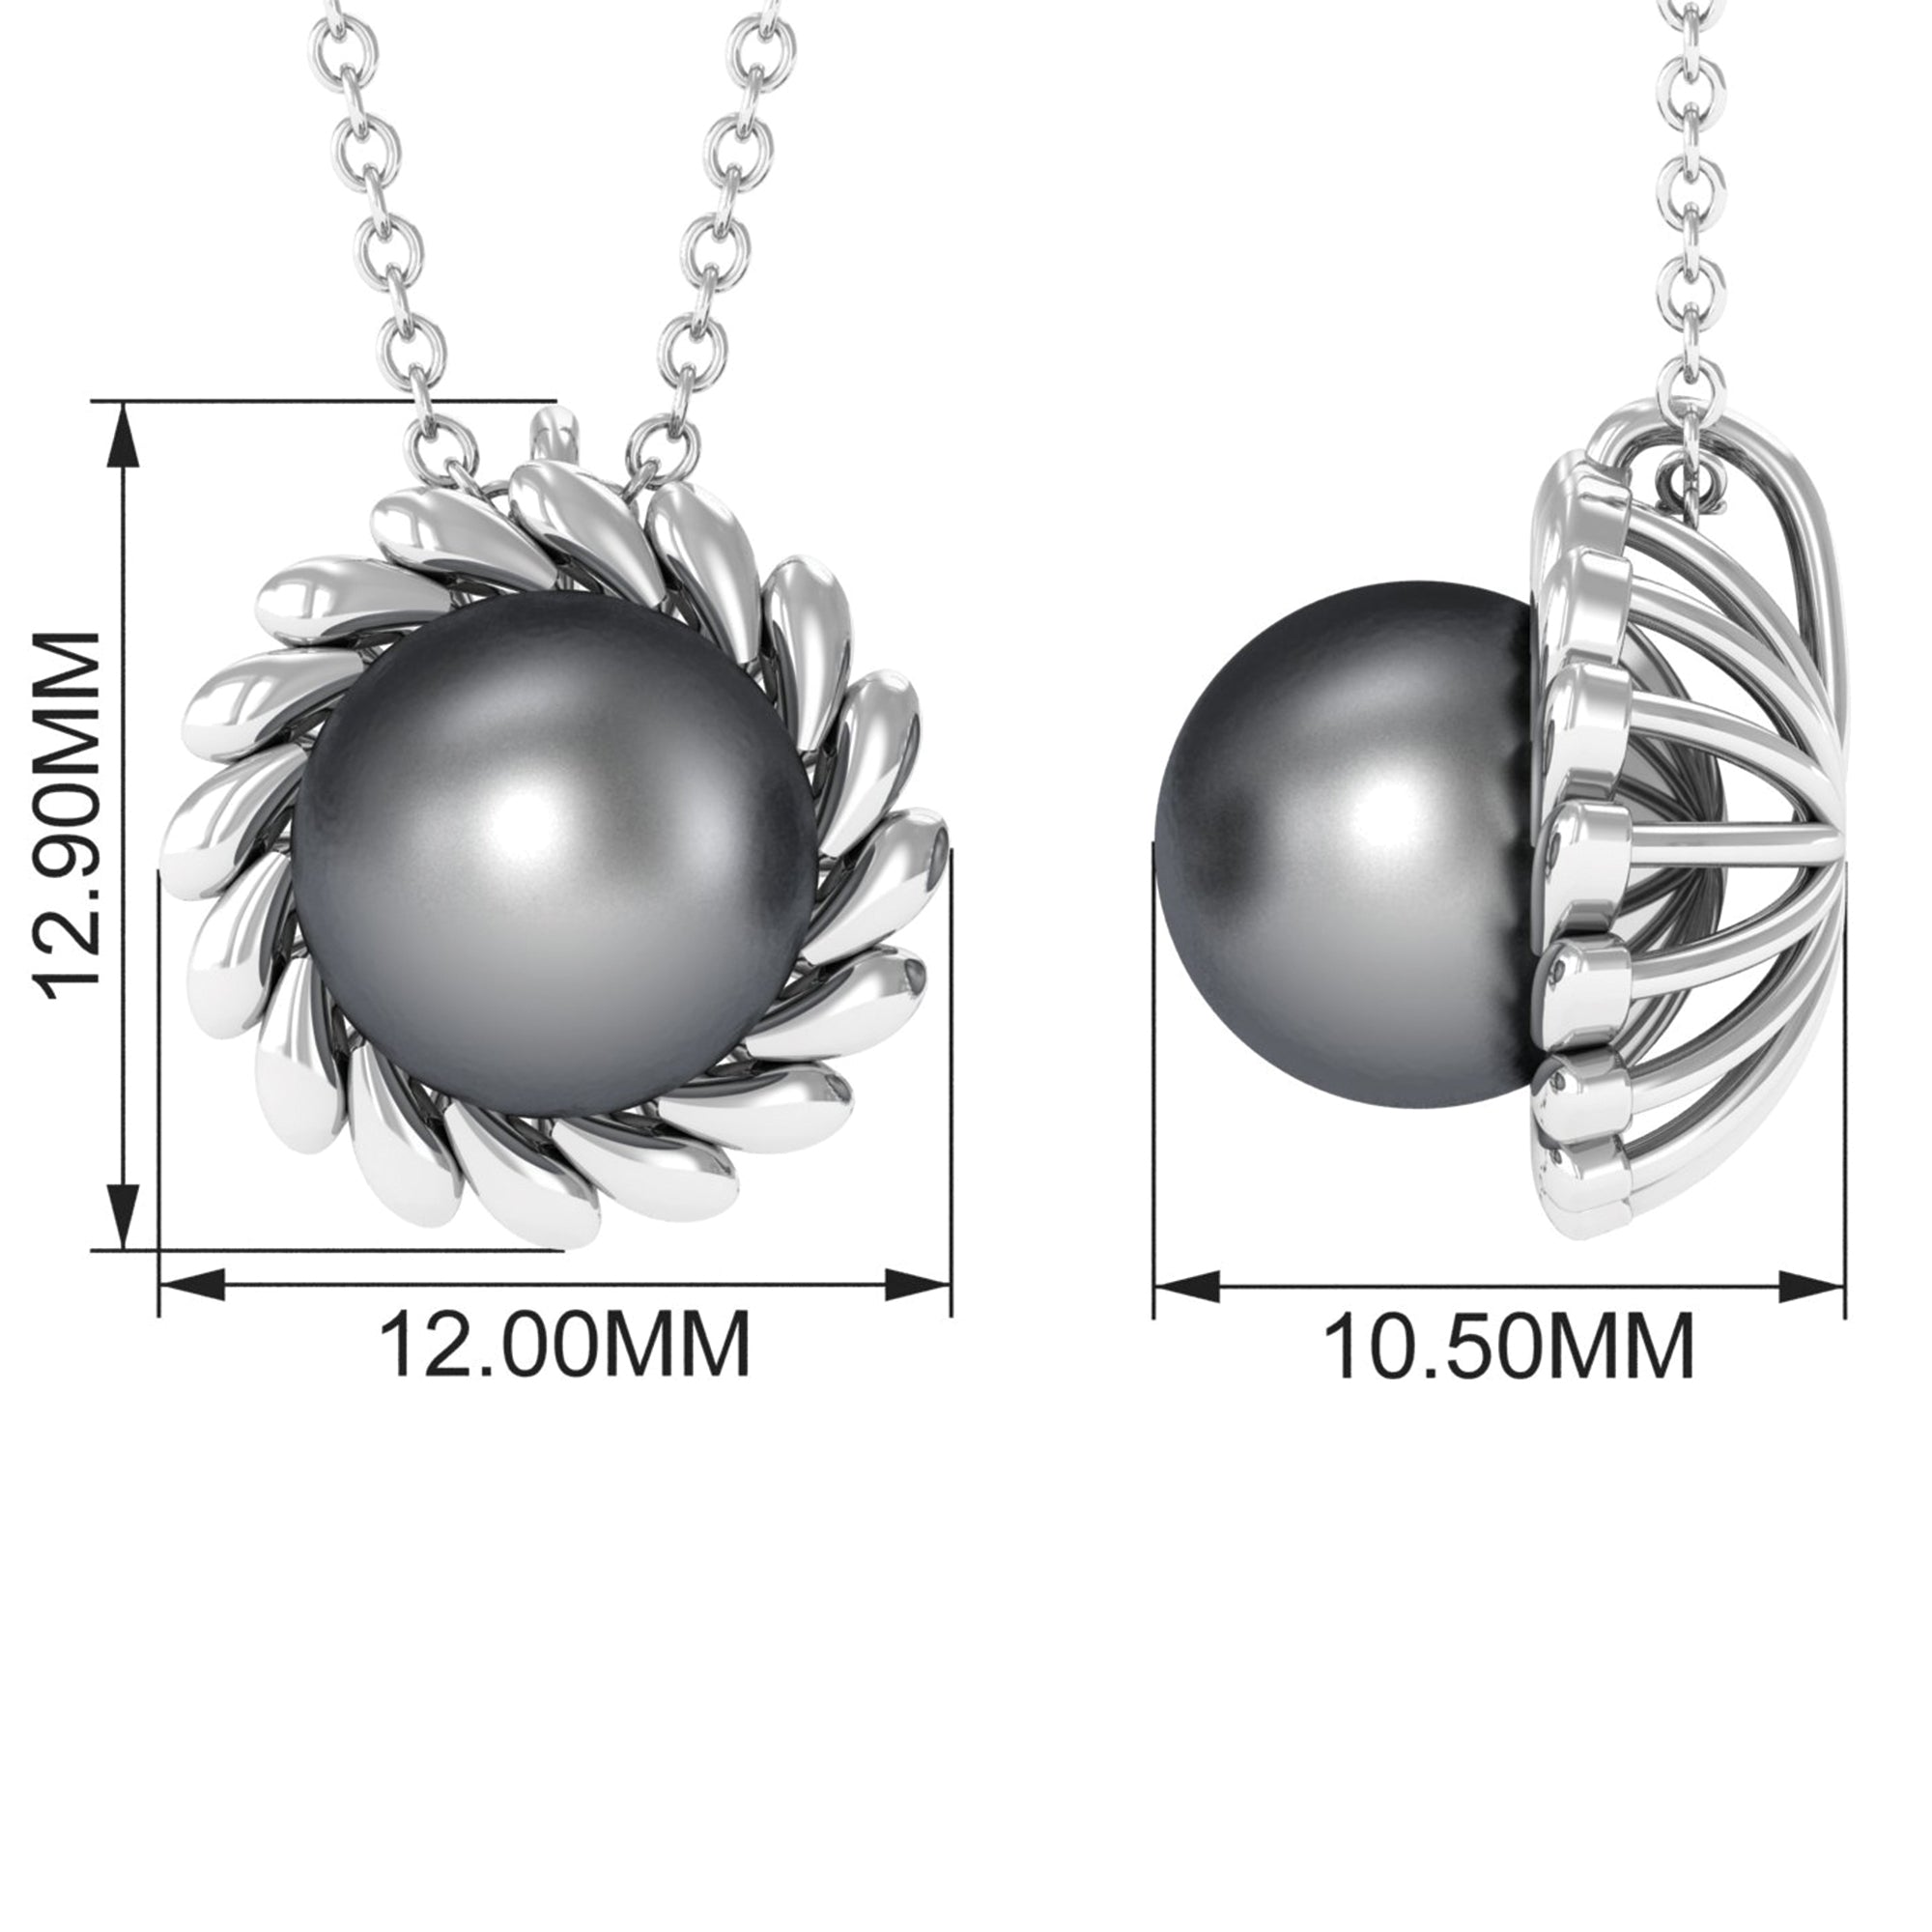 8 MM Black Pearl Solitaire Pendant in Spiral Design Tahitian pearl-AAAA Quality - Arisha Jewels